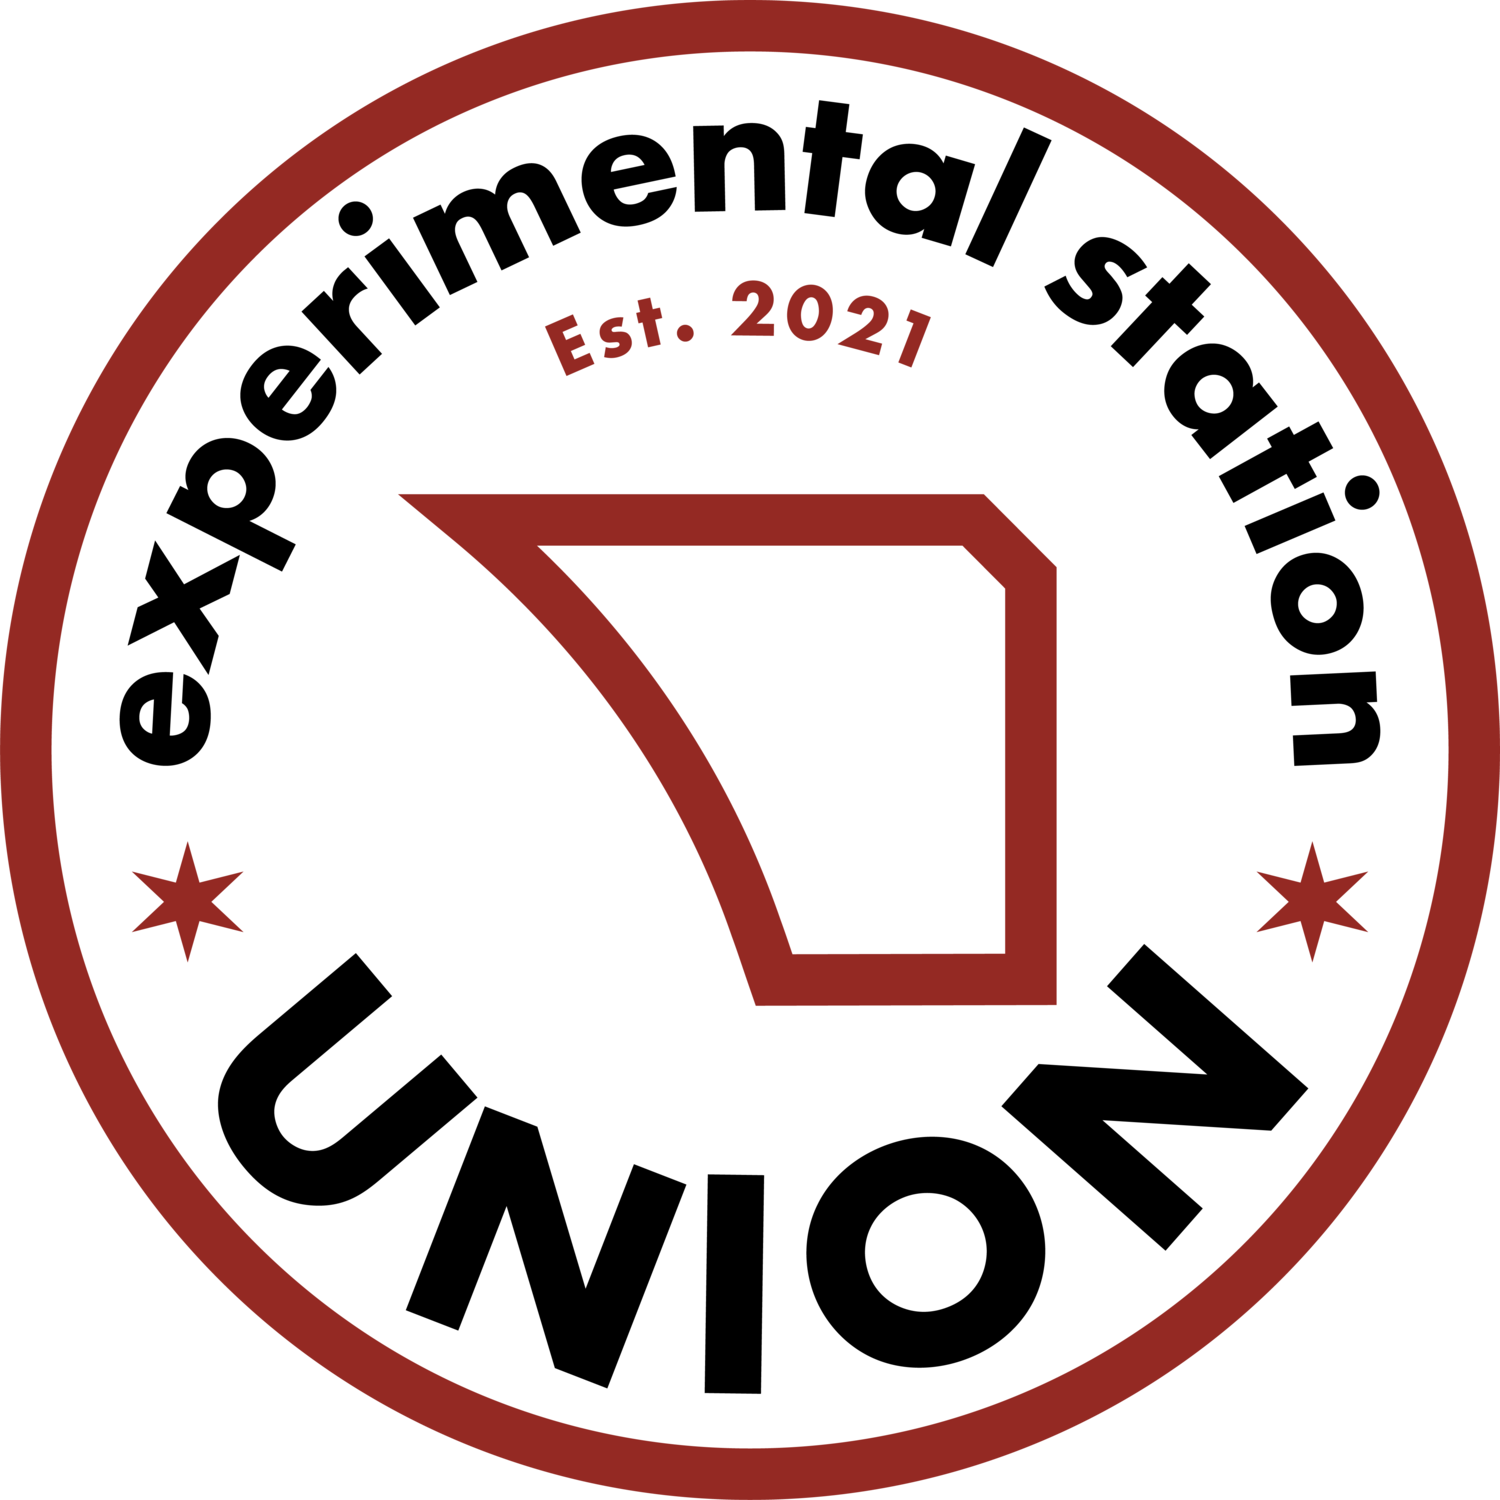 Experimental Station Union